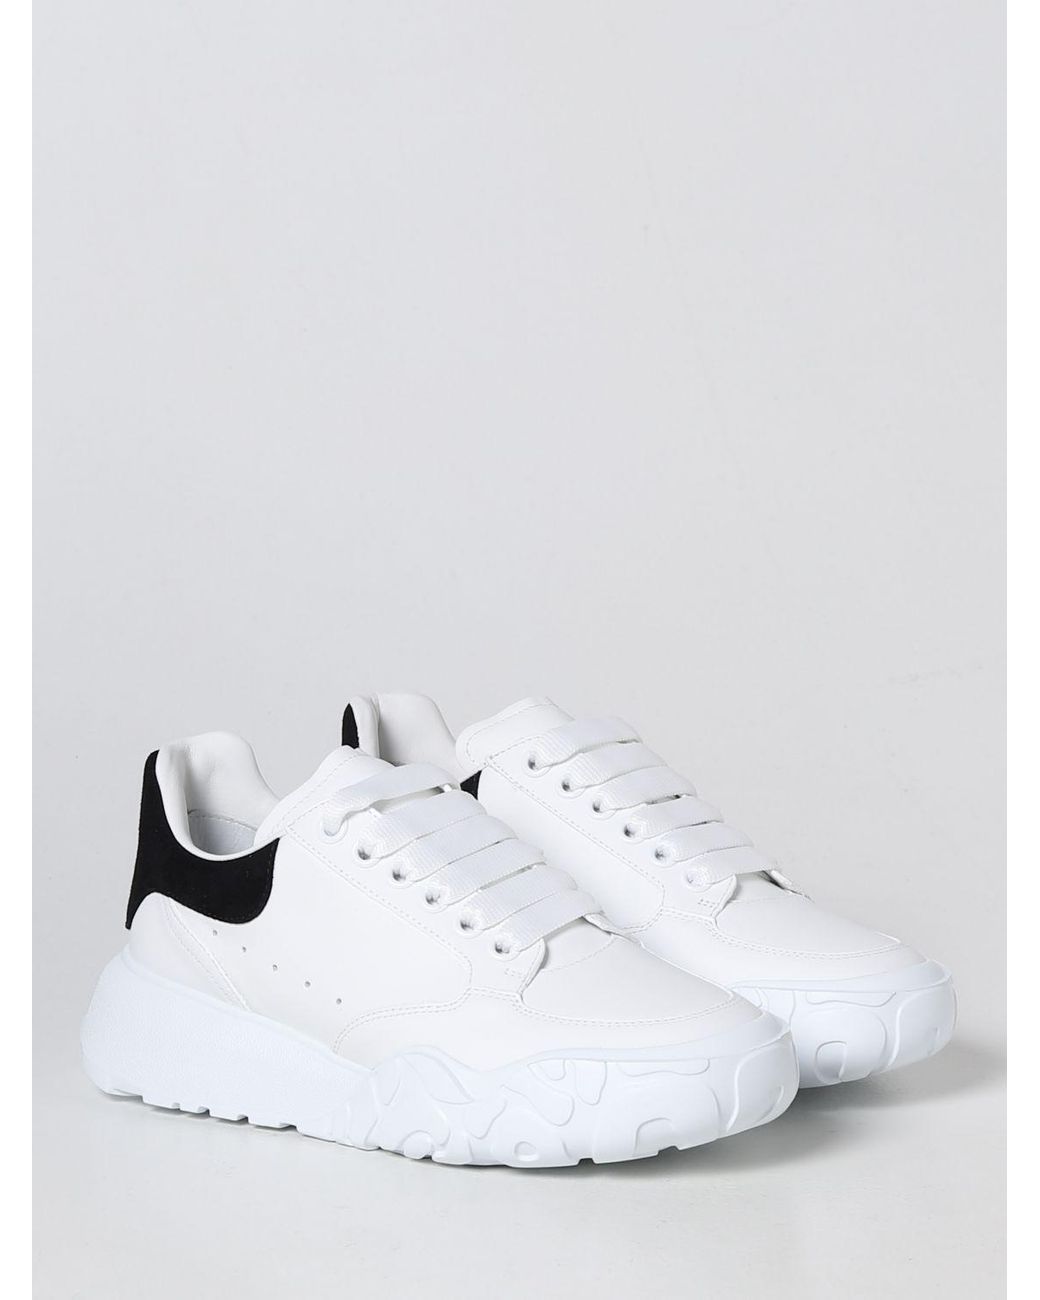 Alexander McQueen Sneakers in White | Lyst